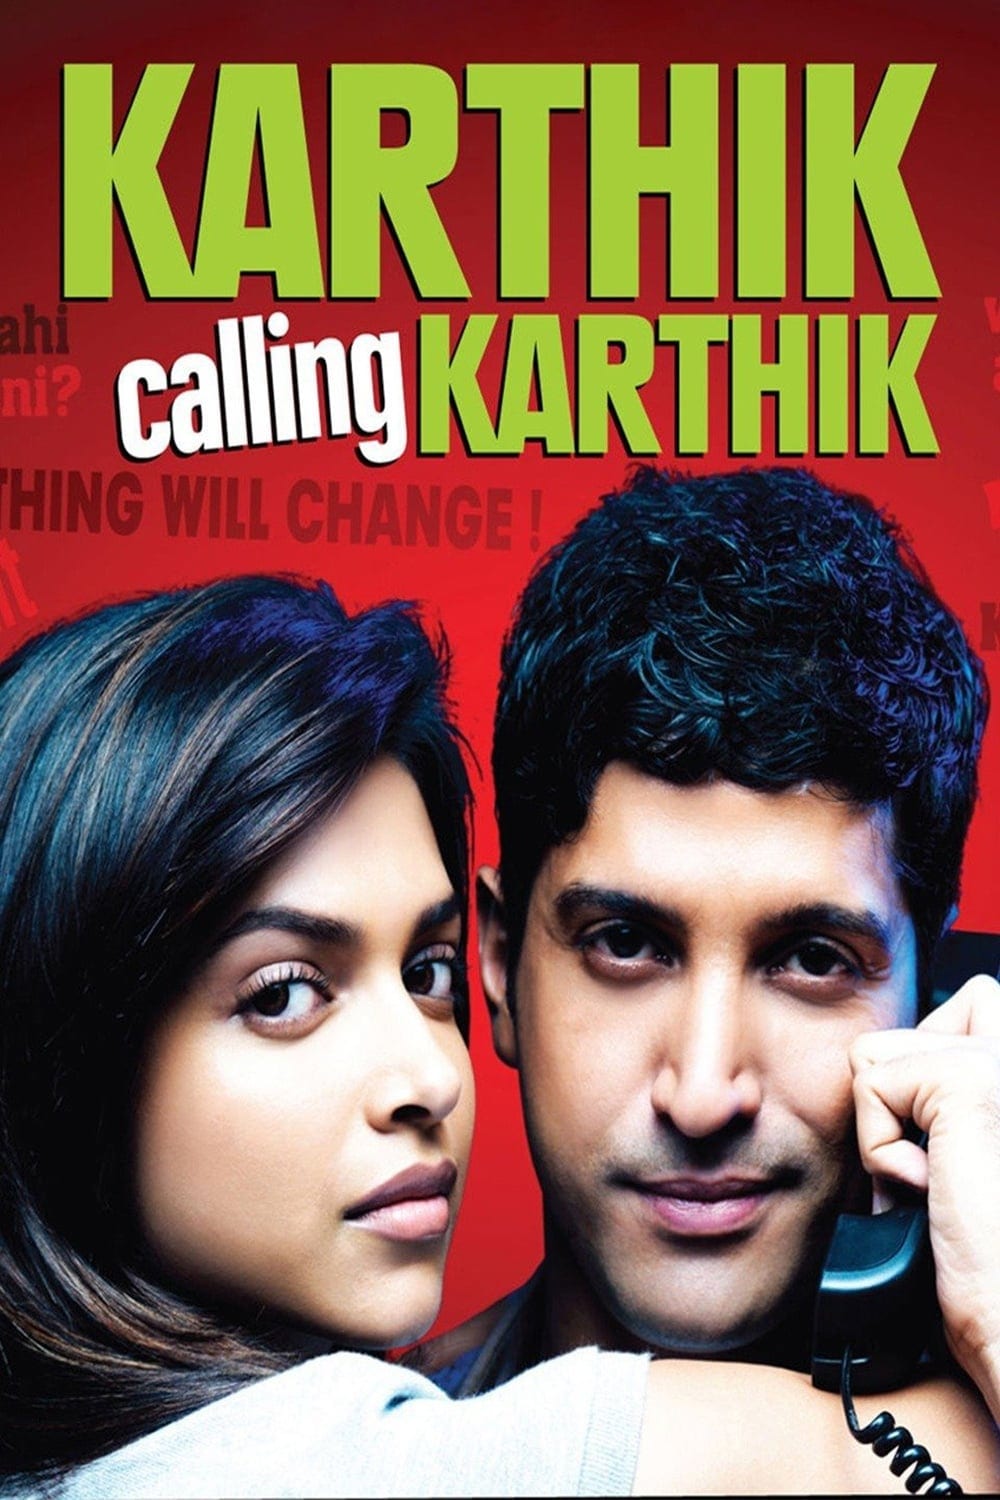 Poster for the movie "Karthik Calling Karthik"